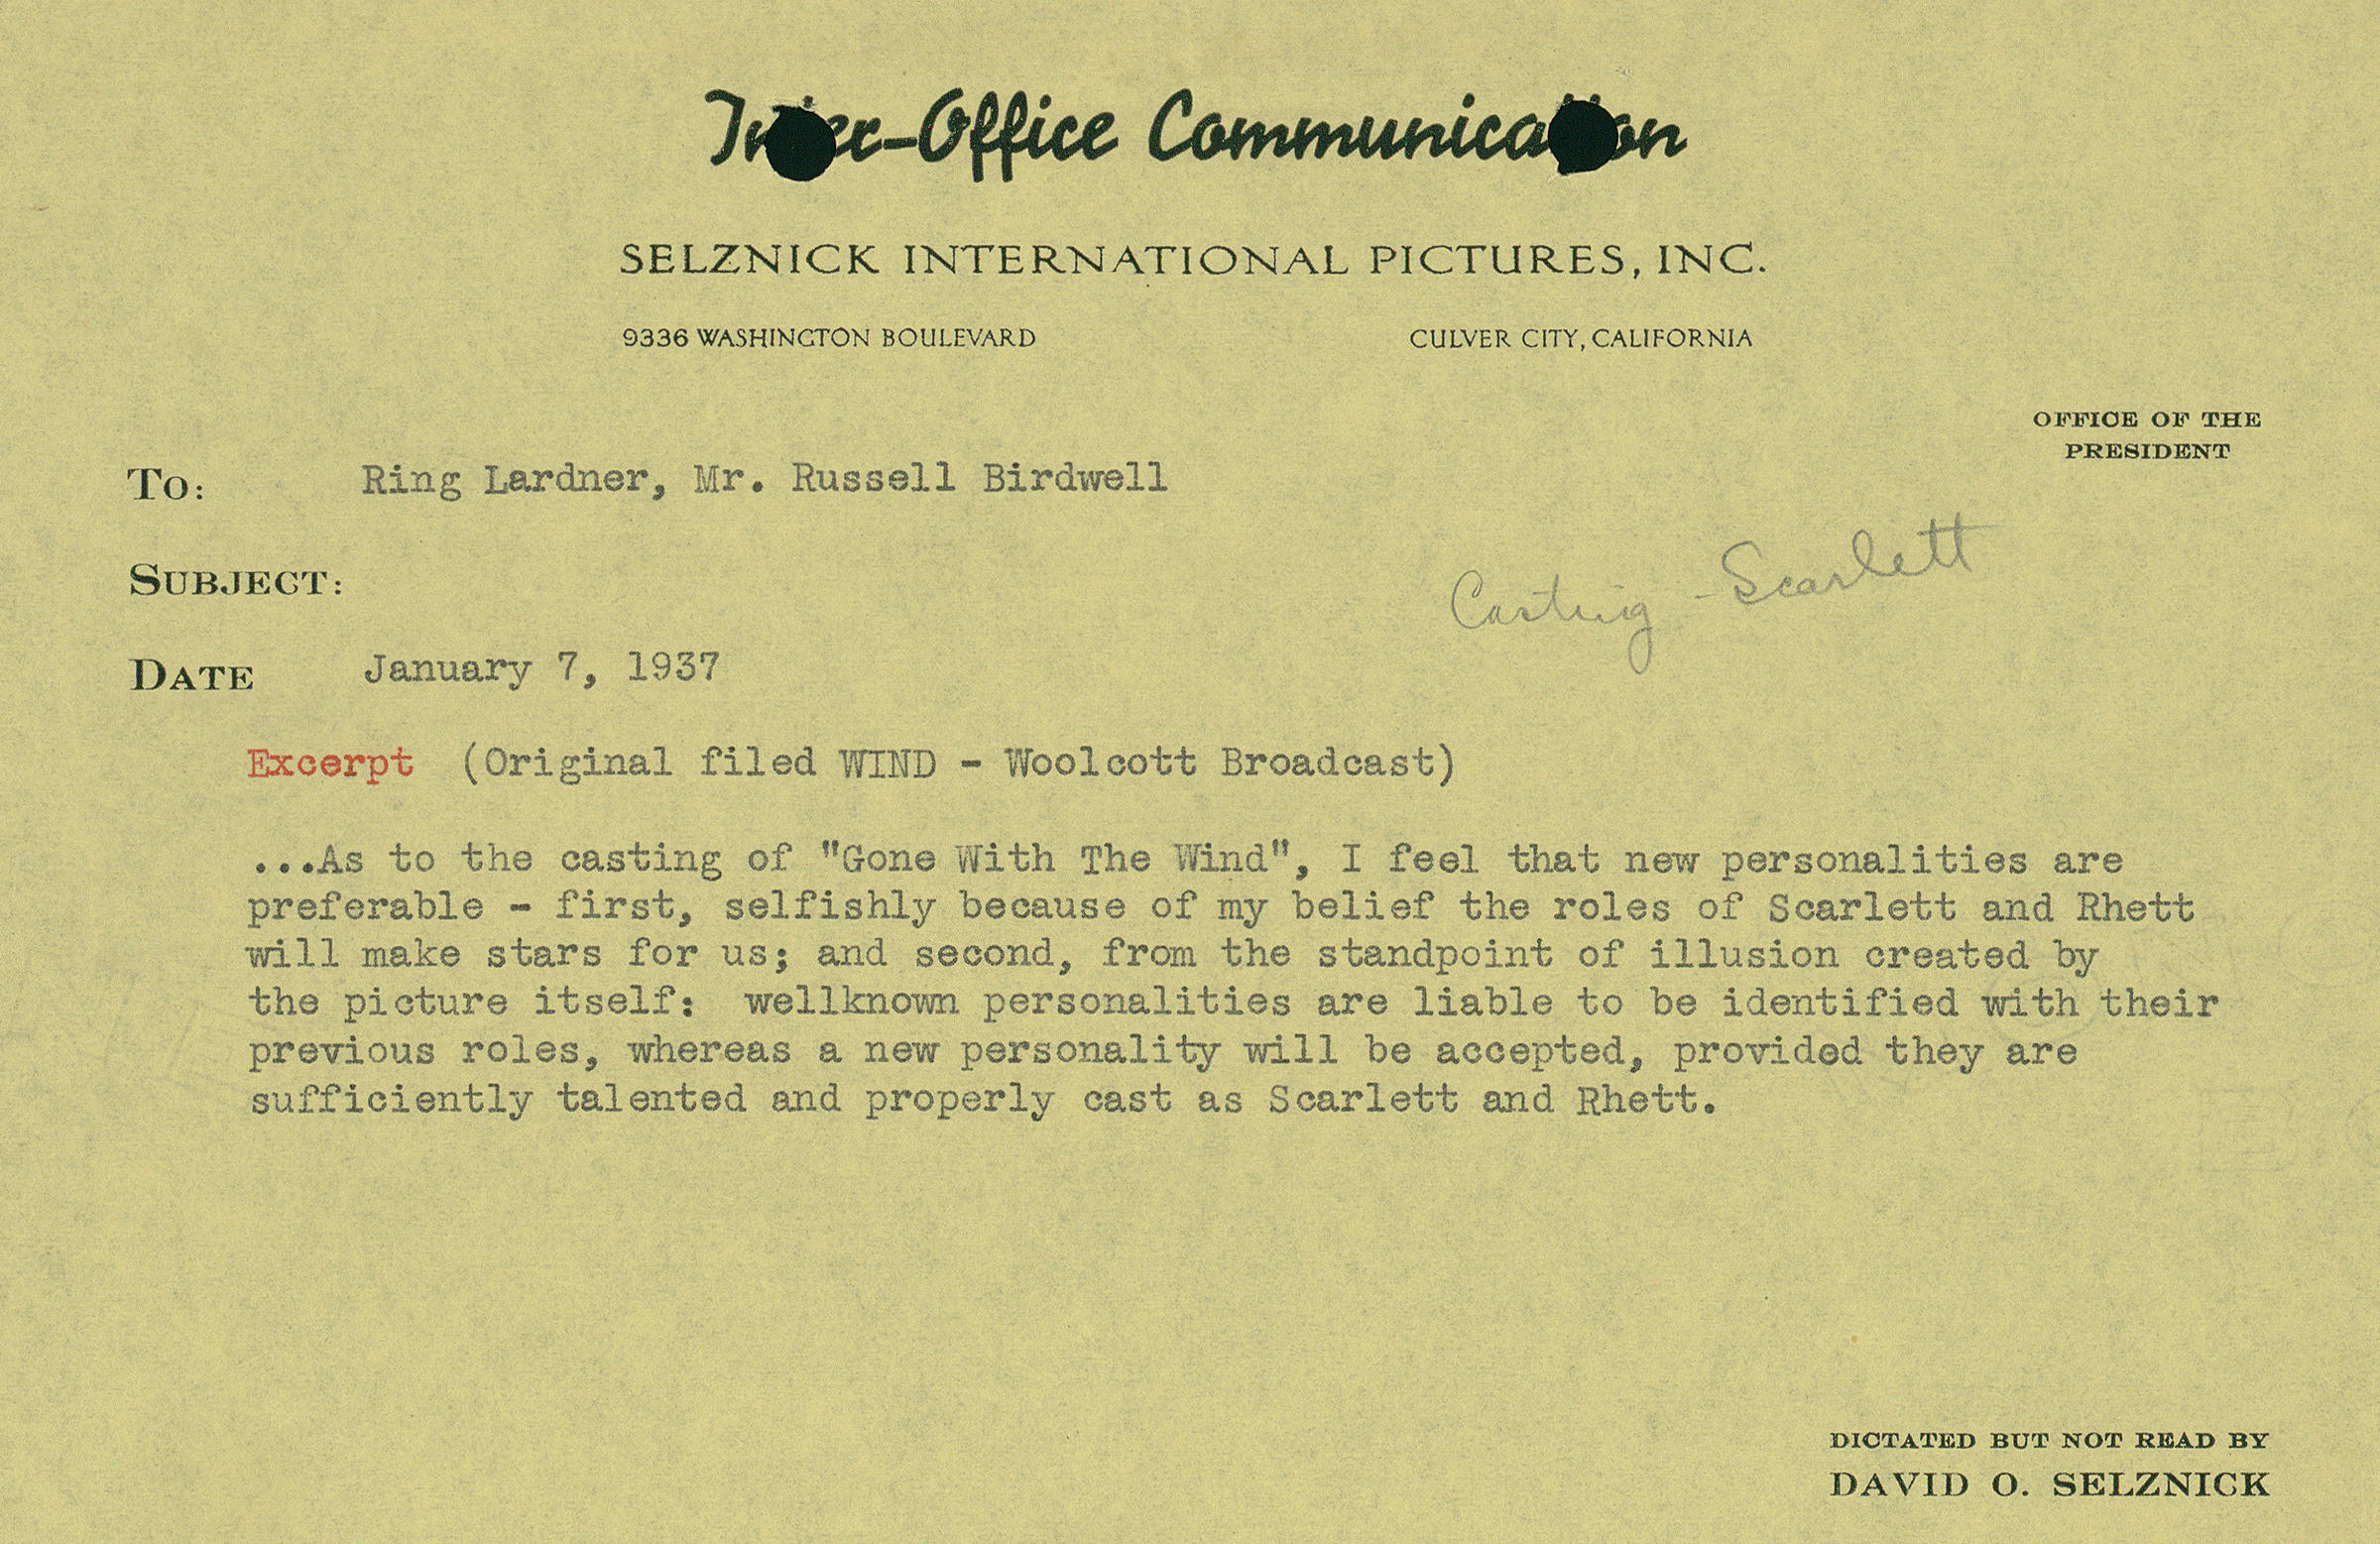 Memo from David O. Selznick by David O. Selznick